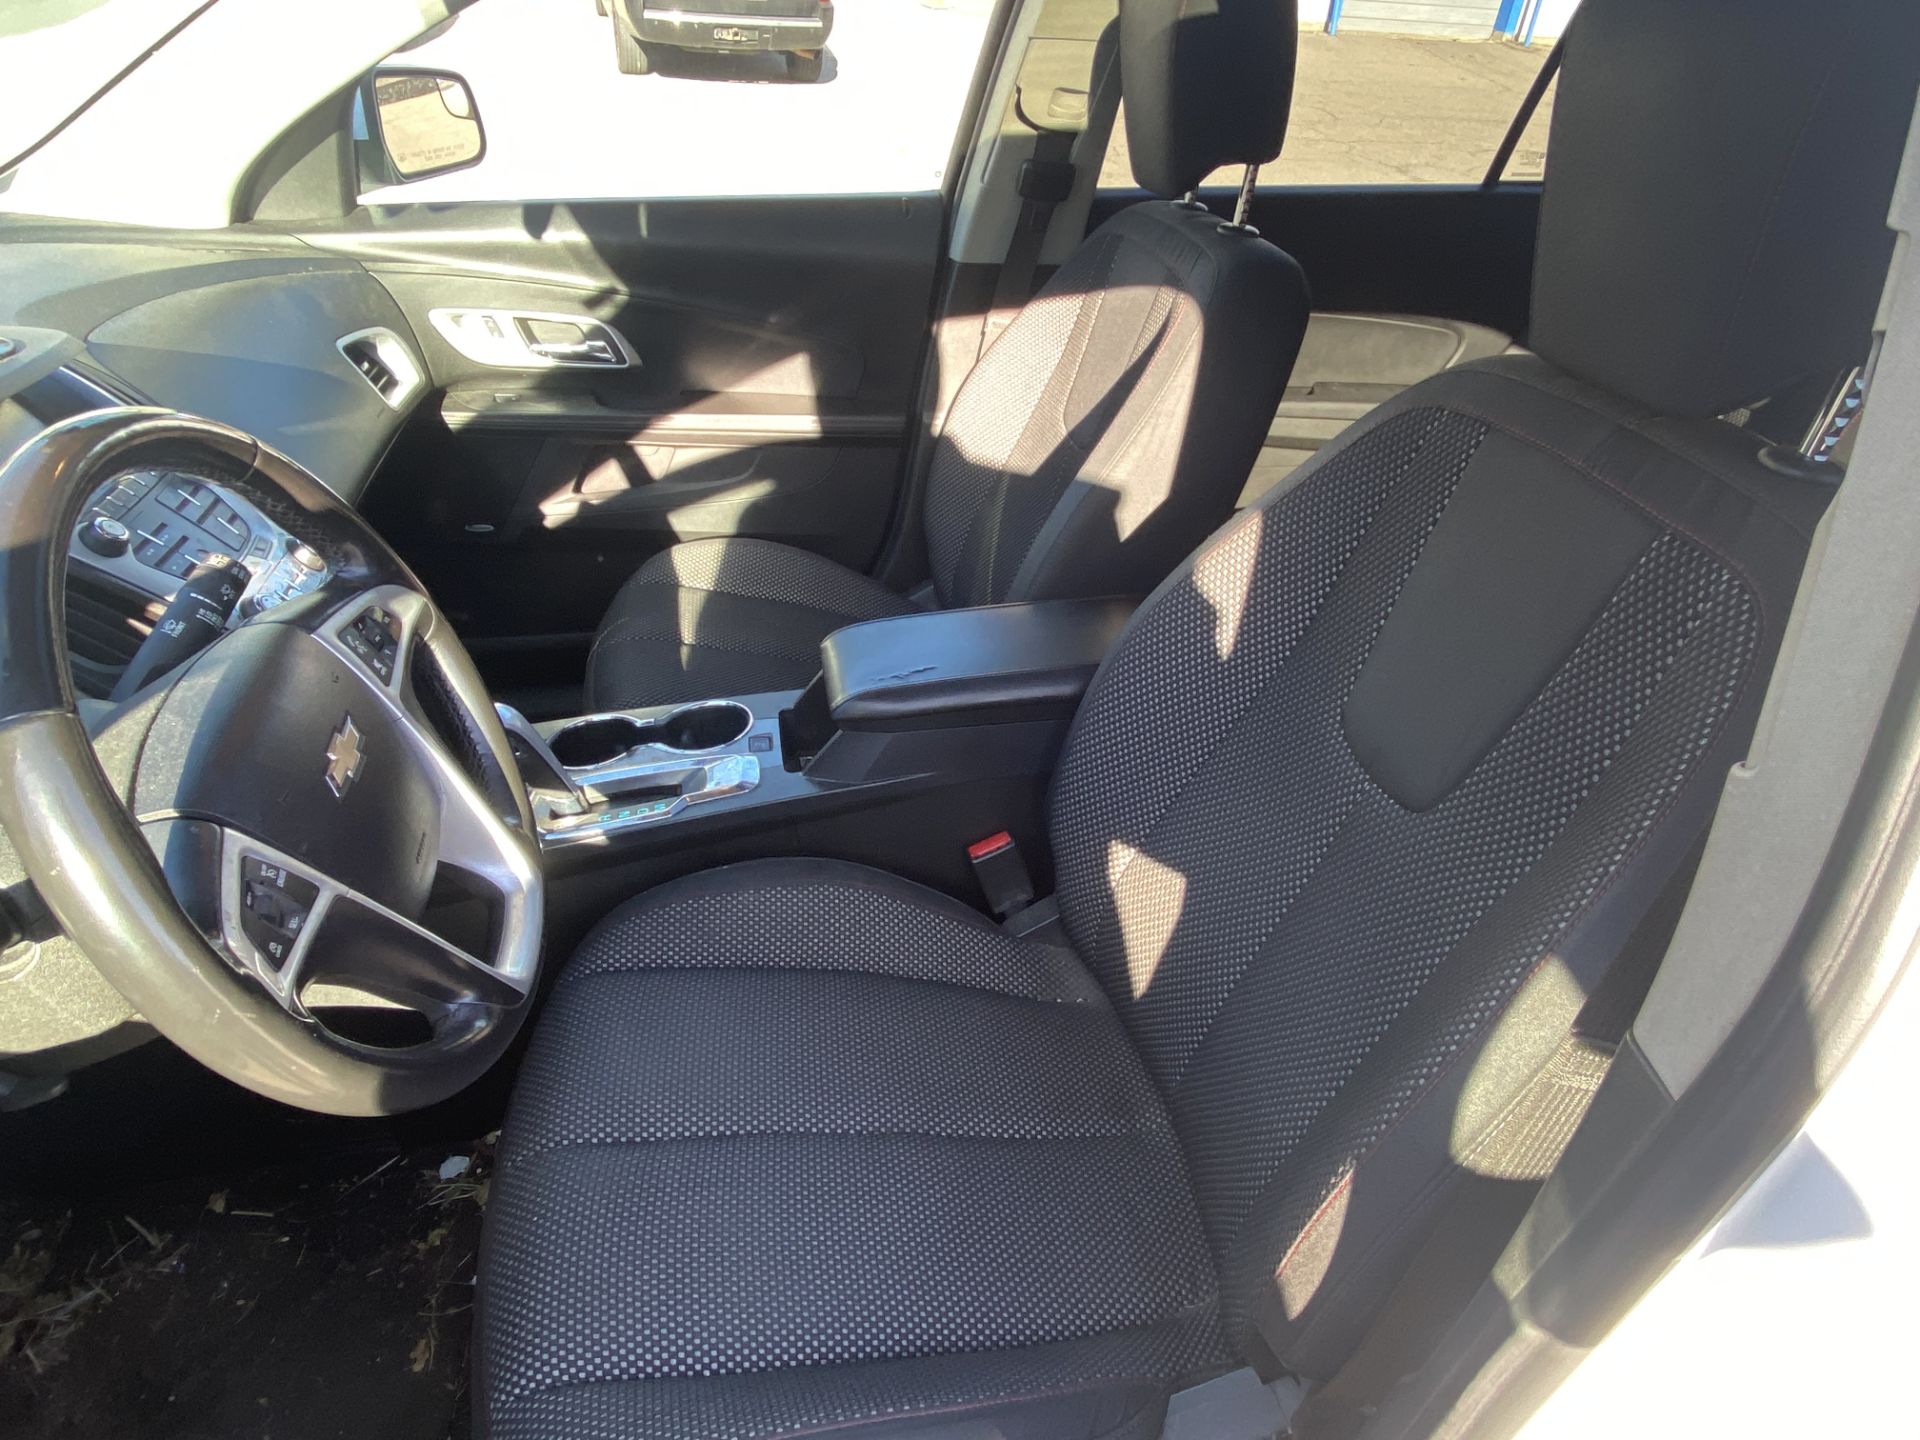 2013 Chevrolet Equinox LT AWD, 4 Cylinder 2.4L, Rear Backup Camera, Power Windows & Locks, Odom:148, - Image 14 of 16